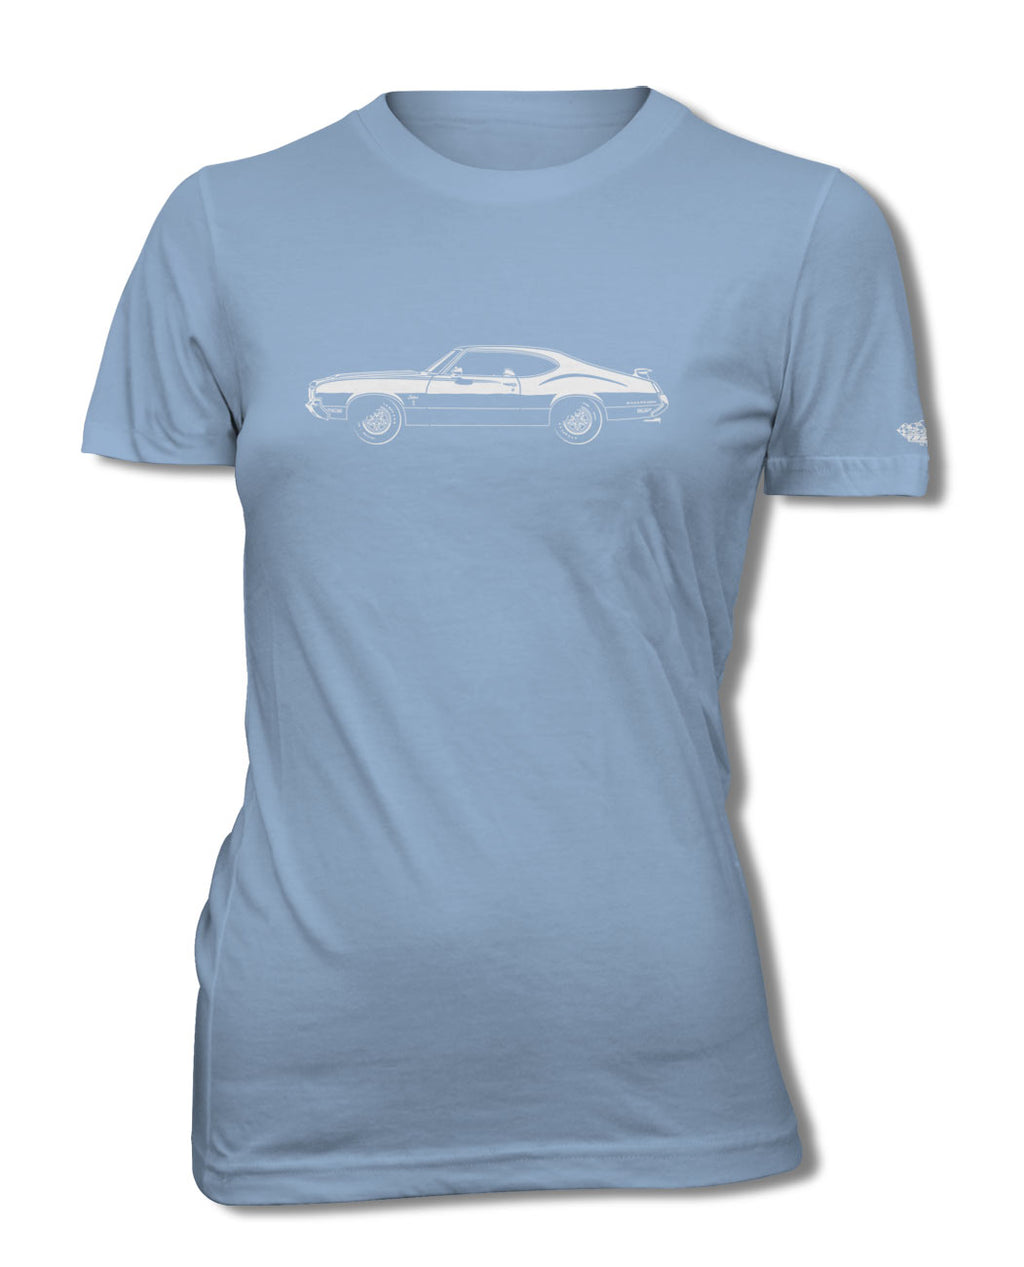 1970 Oldsmobile Cutlass Rallye 350 Coupe T-Shirt - Women - Side View